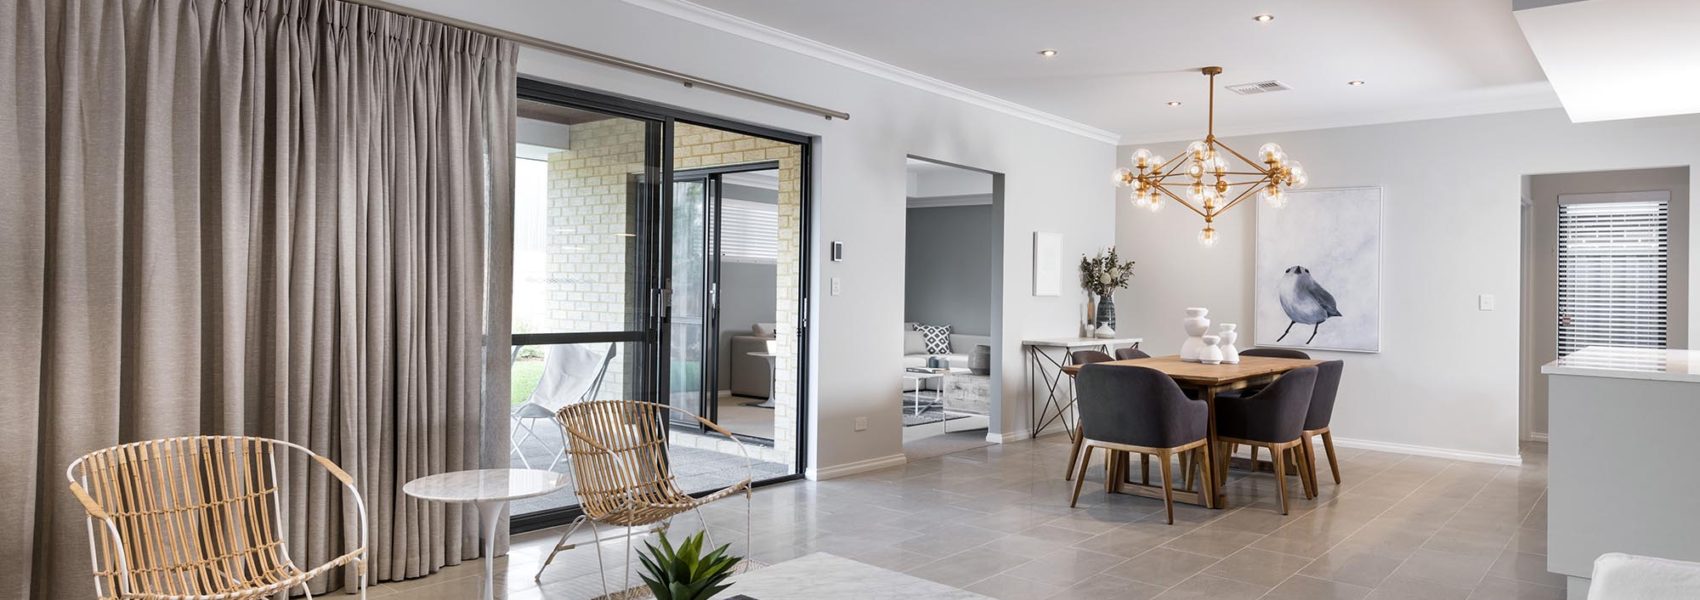 Move Homes builds custom designs around Perth